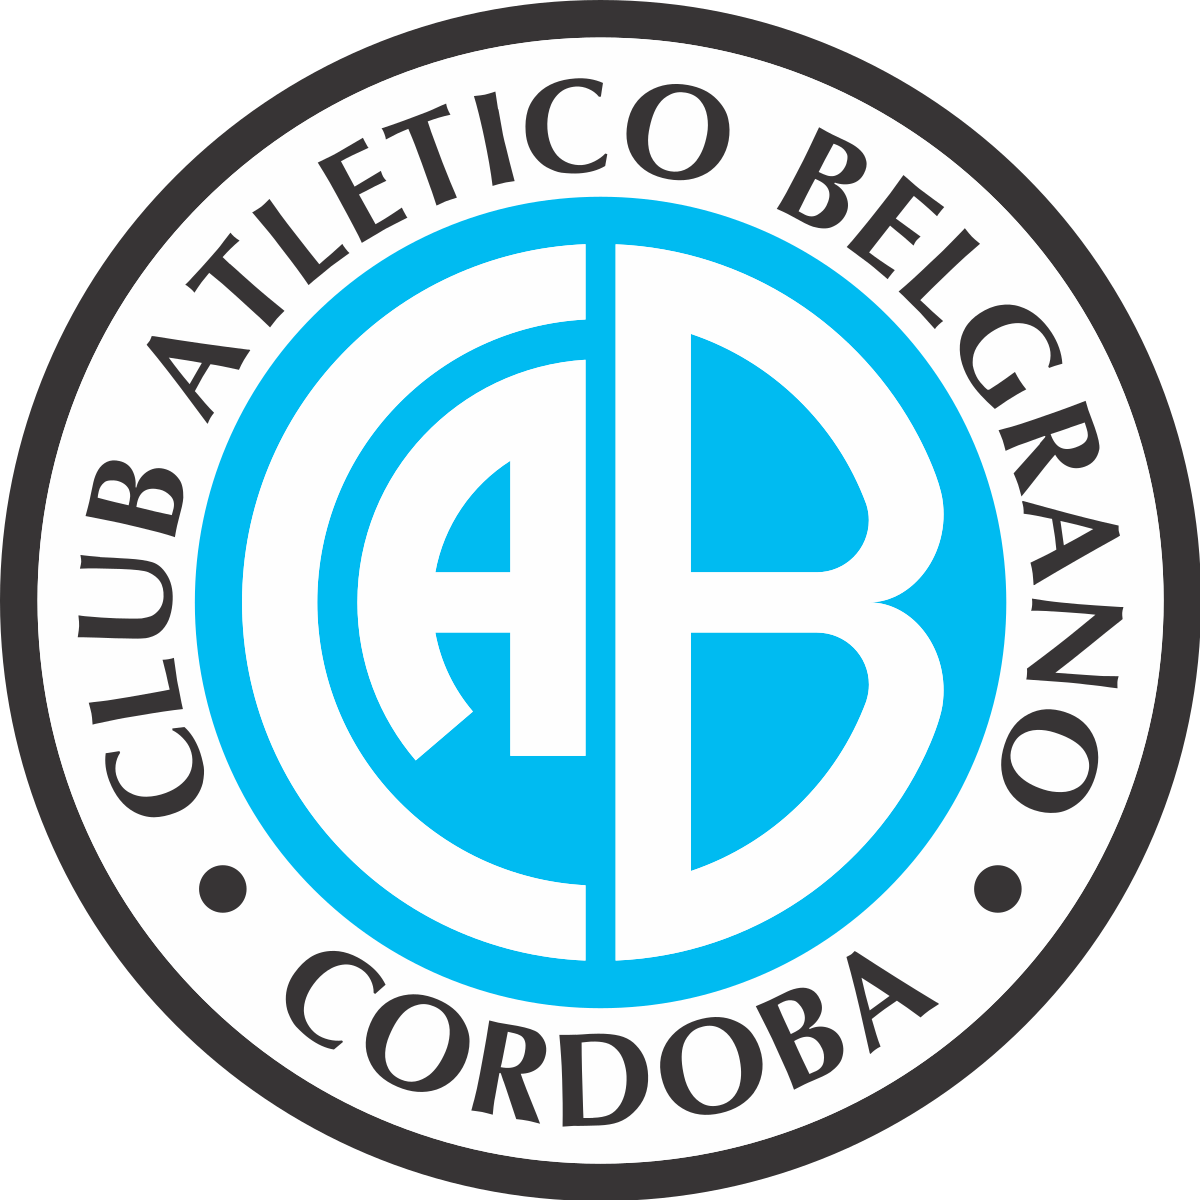 Belgrano Cordoba logo